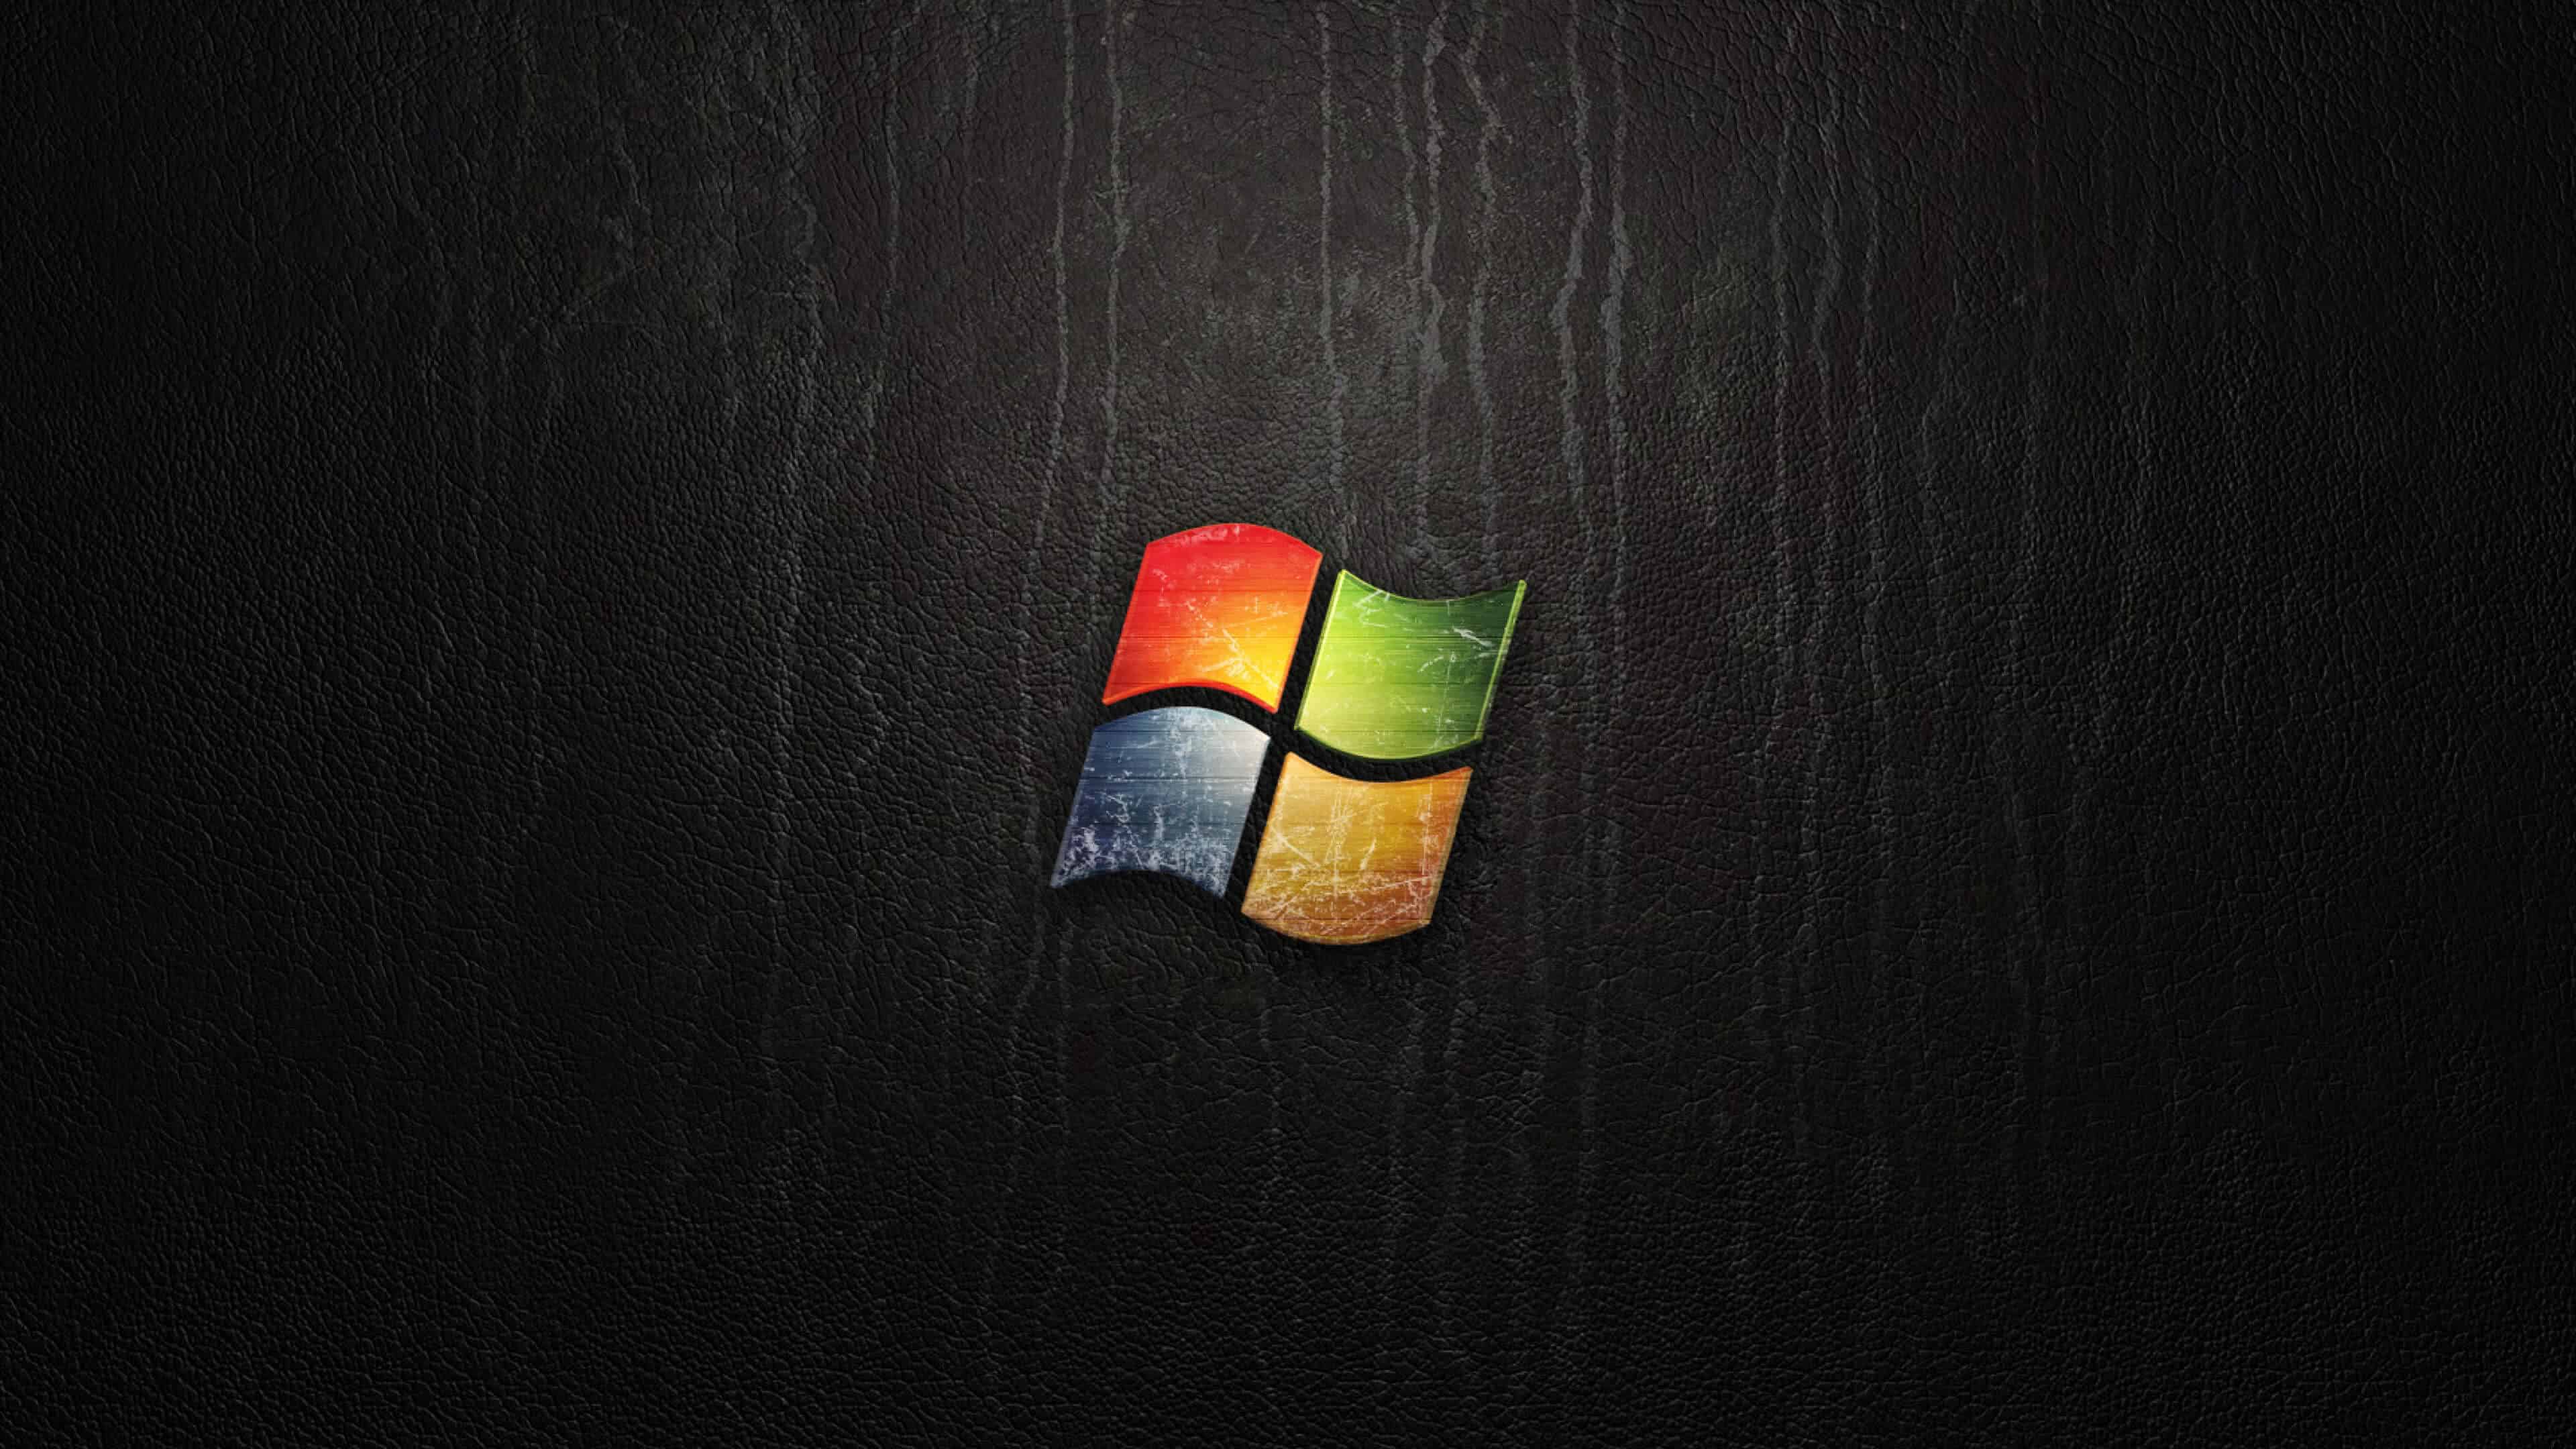 Black Windows Logo - Microsoft Windows Logo Black Background UHD 4K Wallpaper | Pixelz